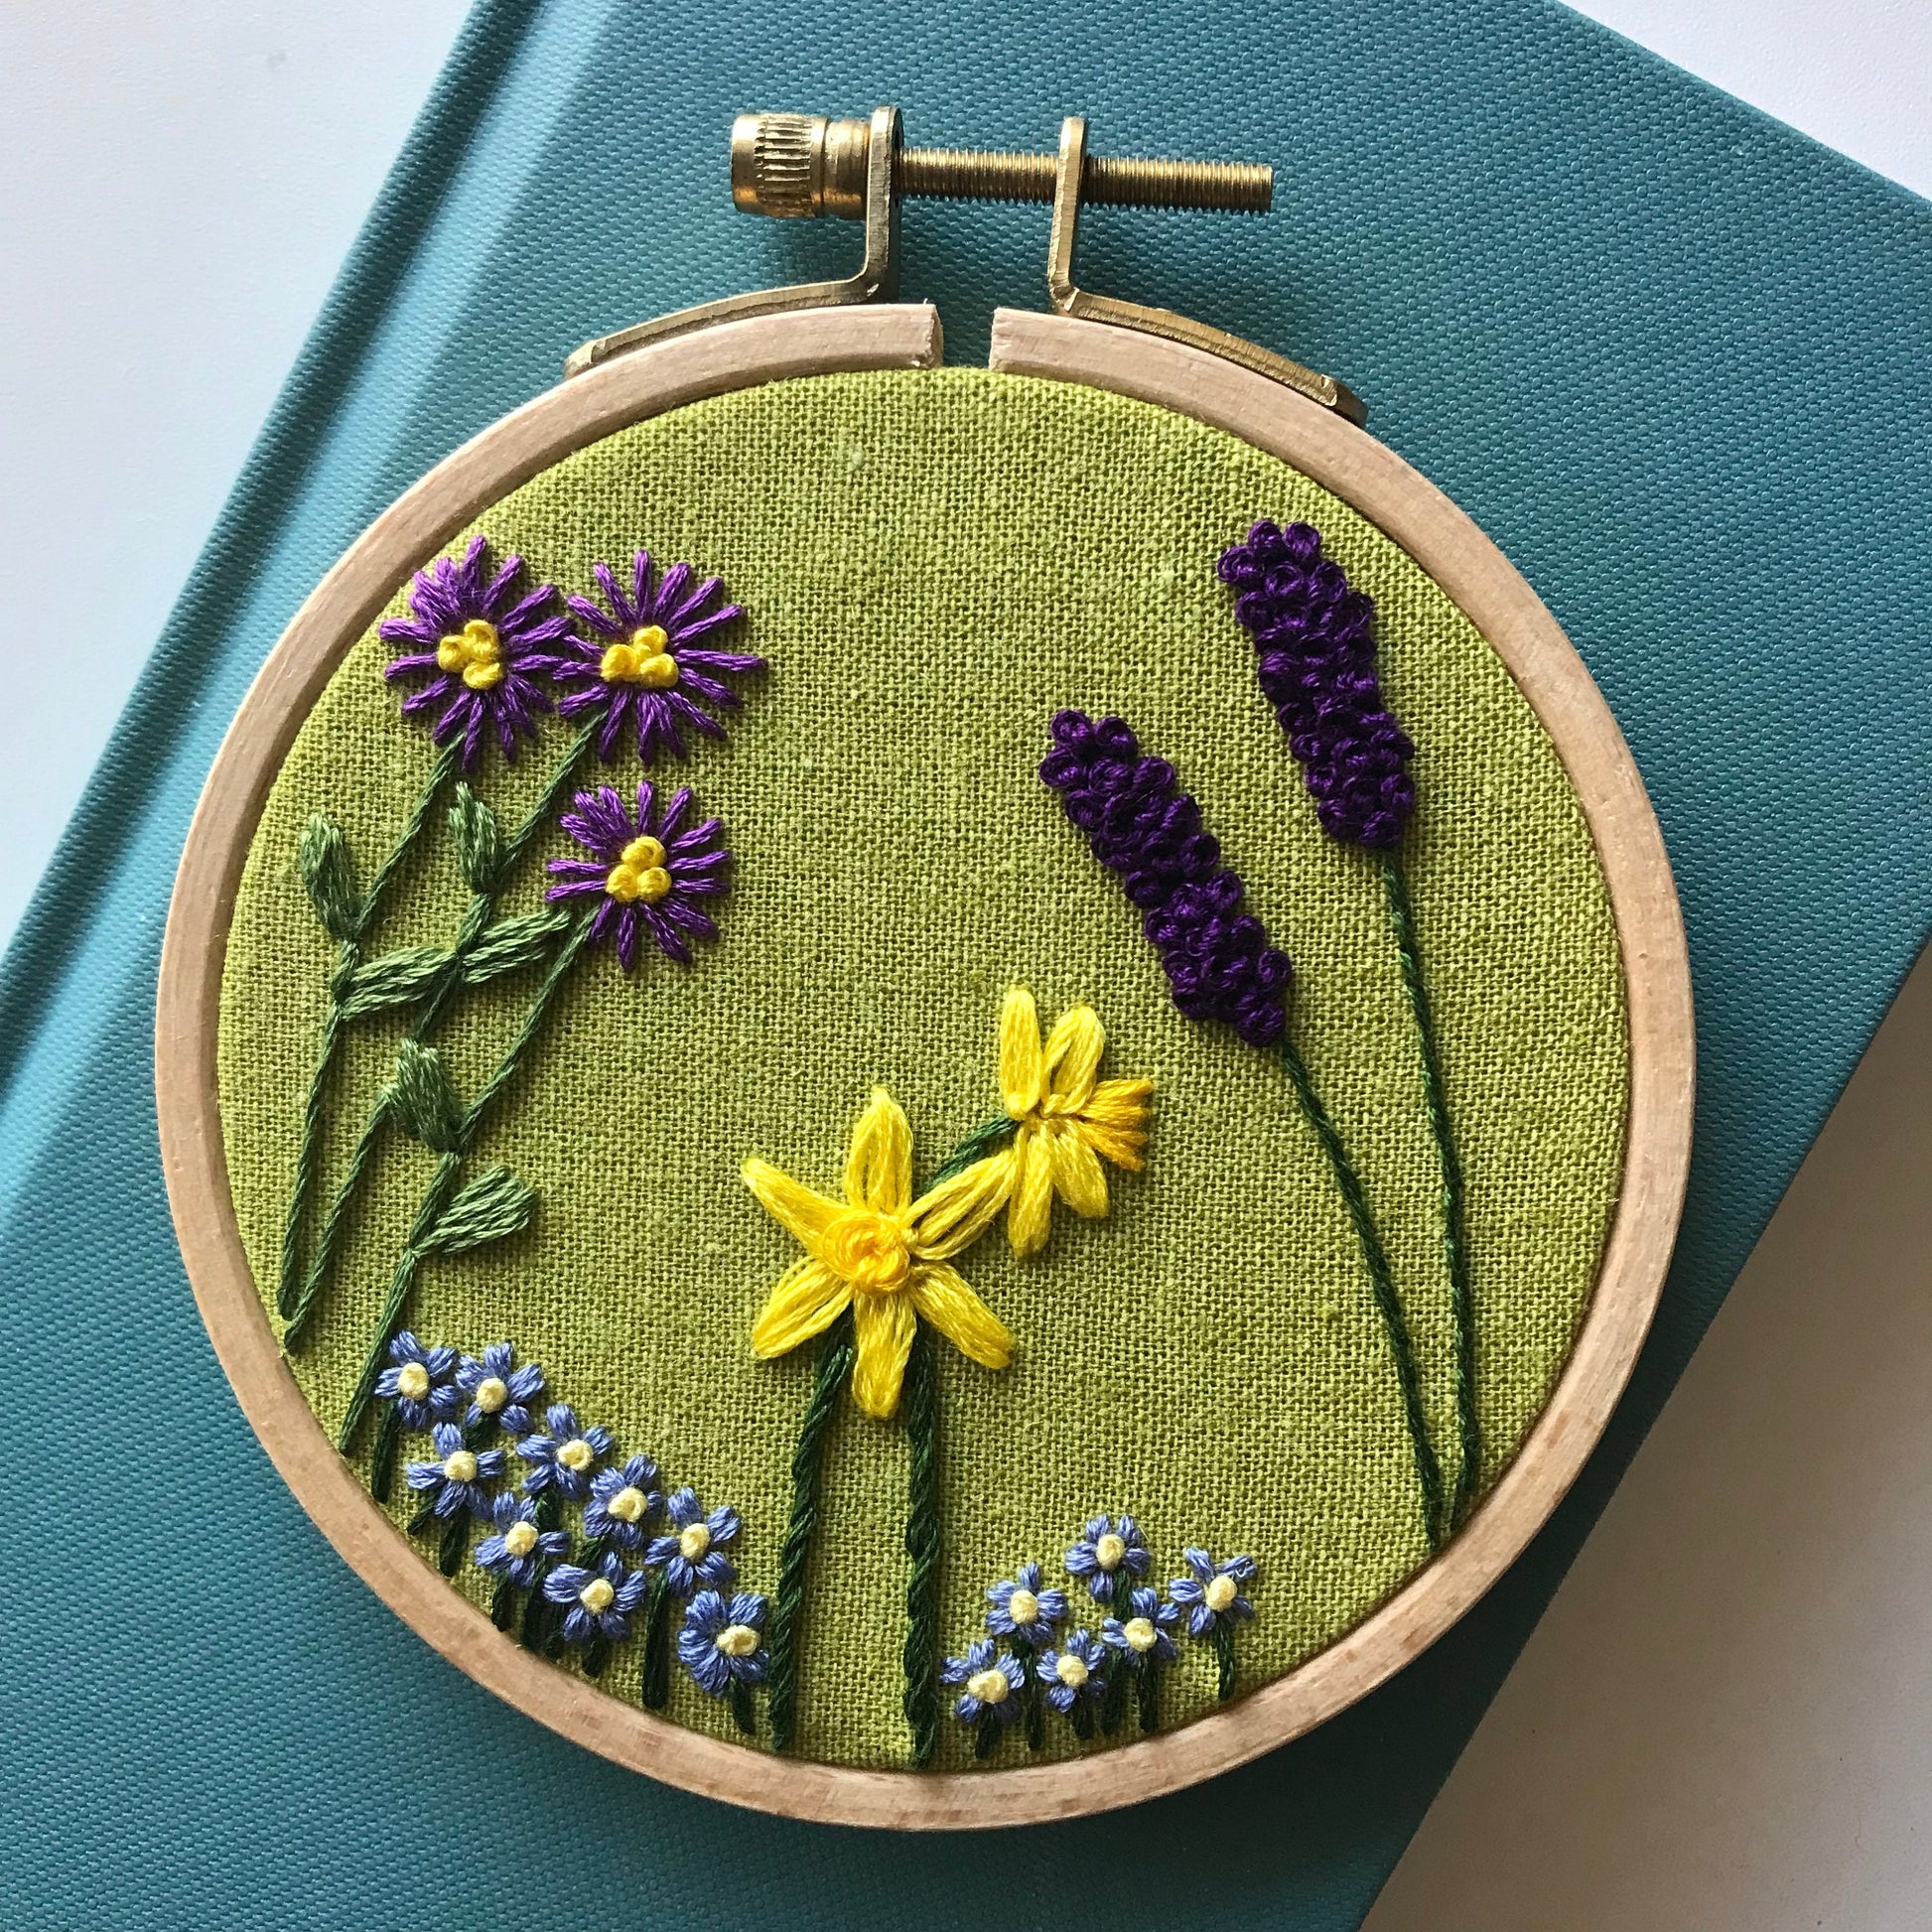 Best Friends Embroidery Kit Beautiful Girl Embroidery Pattern English Manual